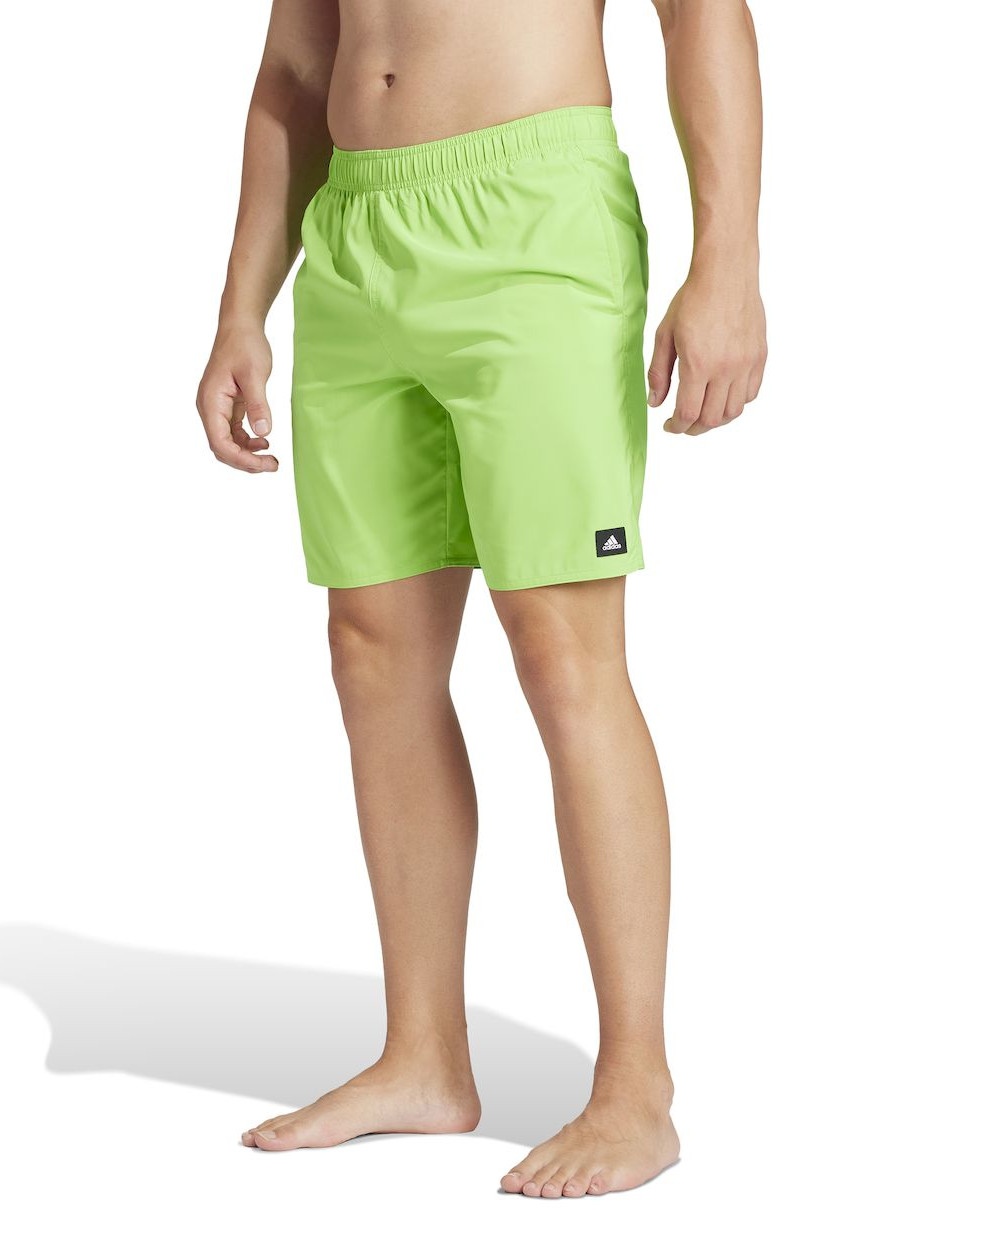  Costume da Bagno shorts pantaloncini UOMO Adidas Solid CLX Classic-Length